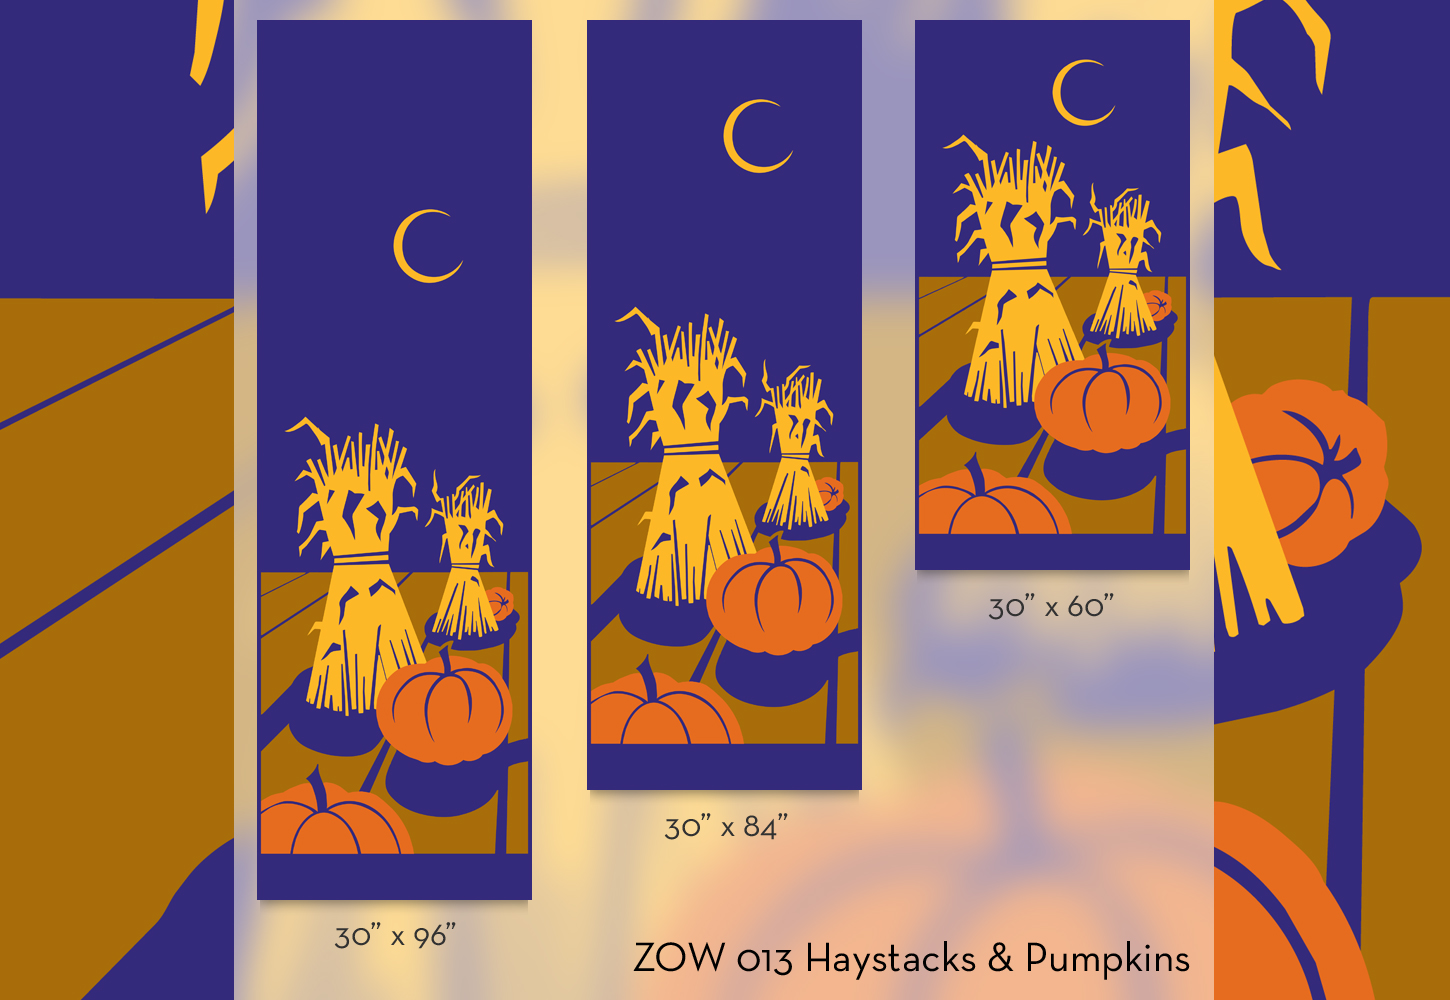 ZOW 013 Haystacks & Pumpkins